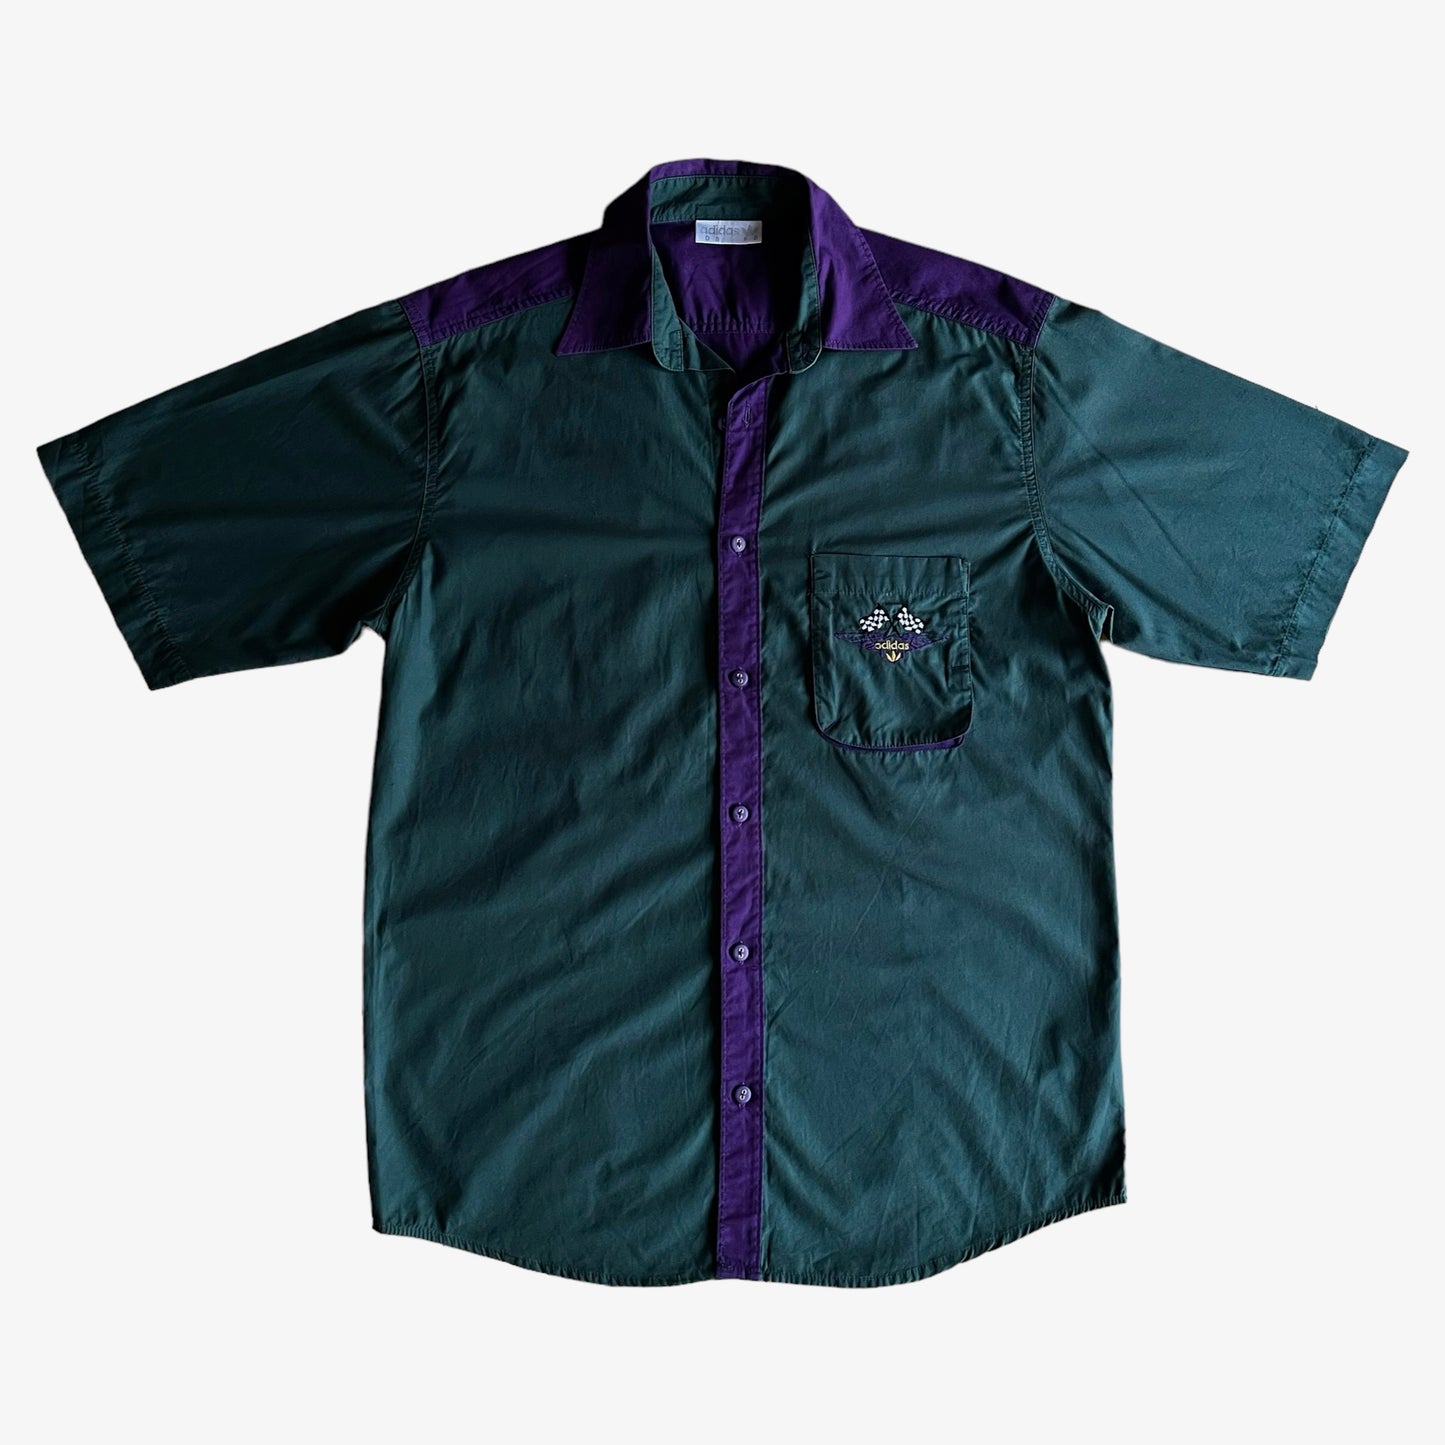 Vintage 90s Adidas Grand Prix Green And Purple Short Sleeve Shirt - Casspios Dream